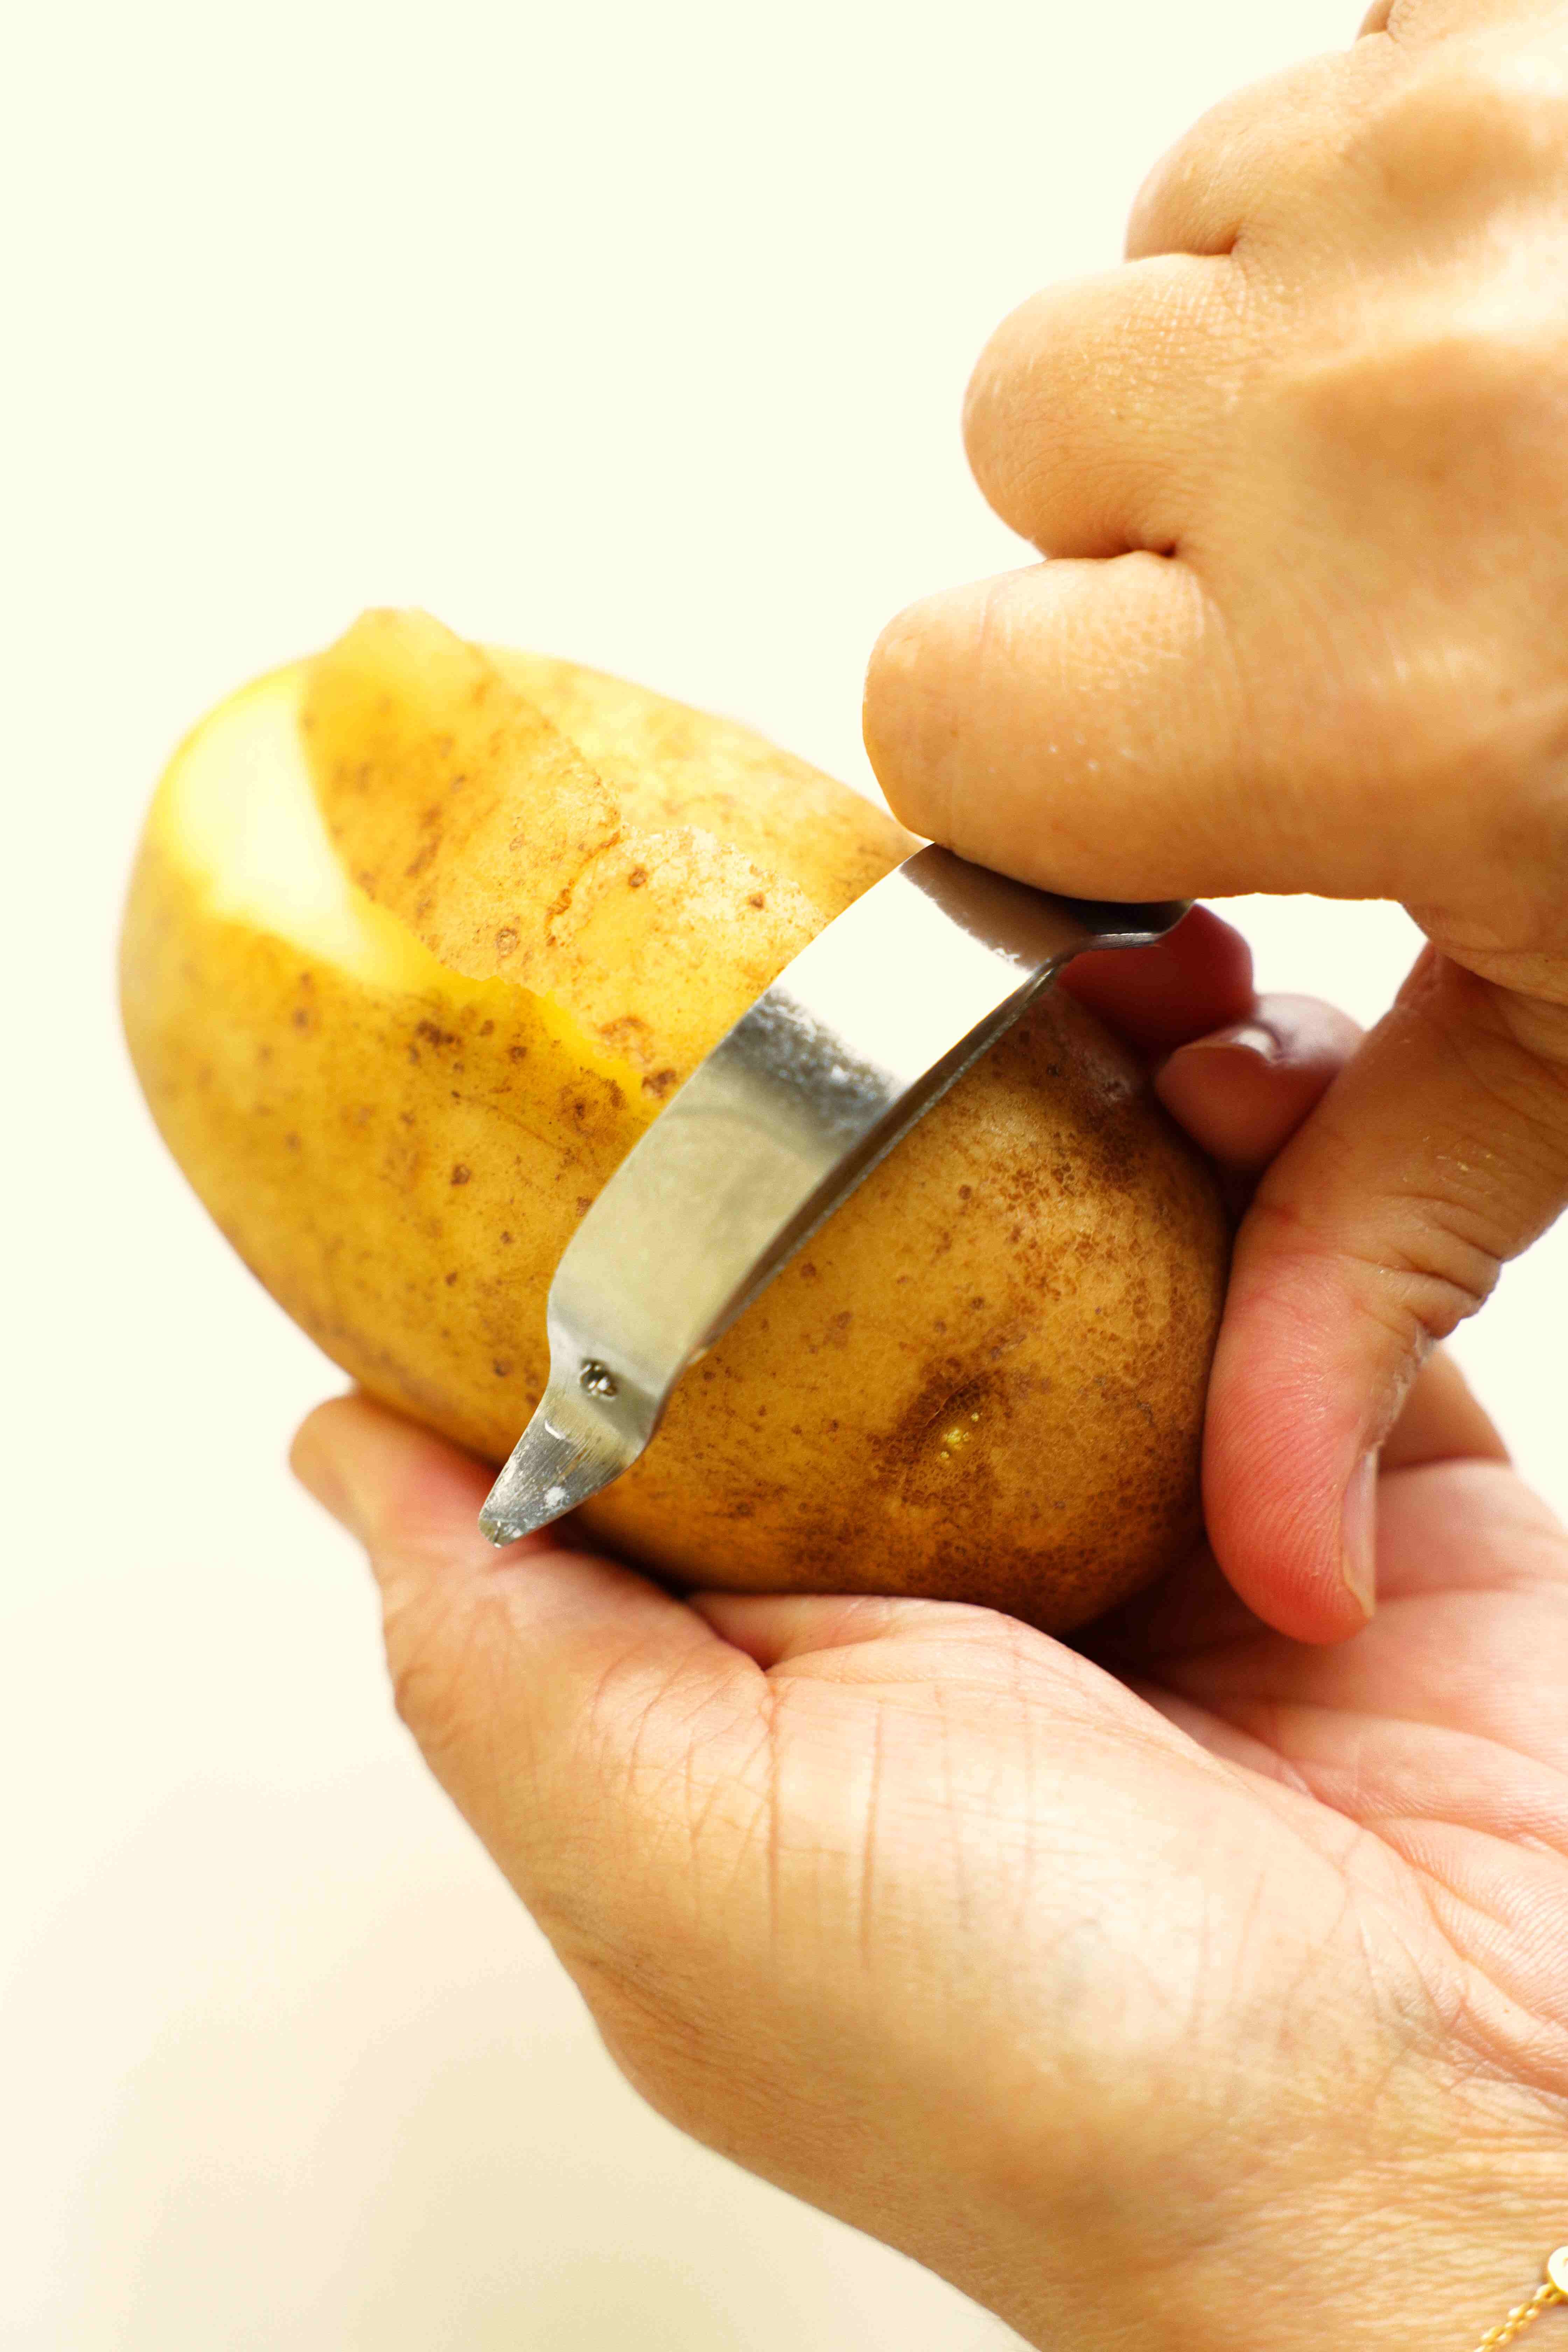 Hands holding a russet potato, with potato peeler peeling it.